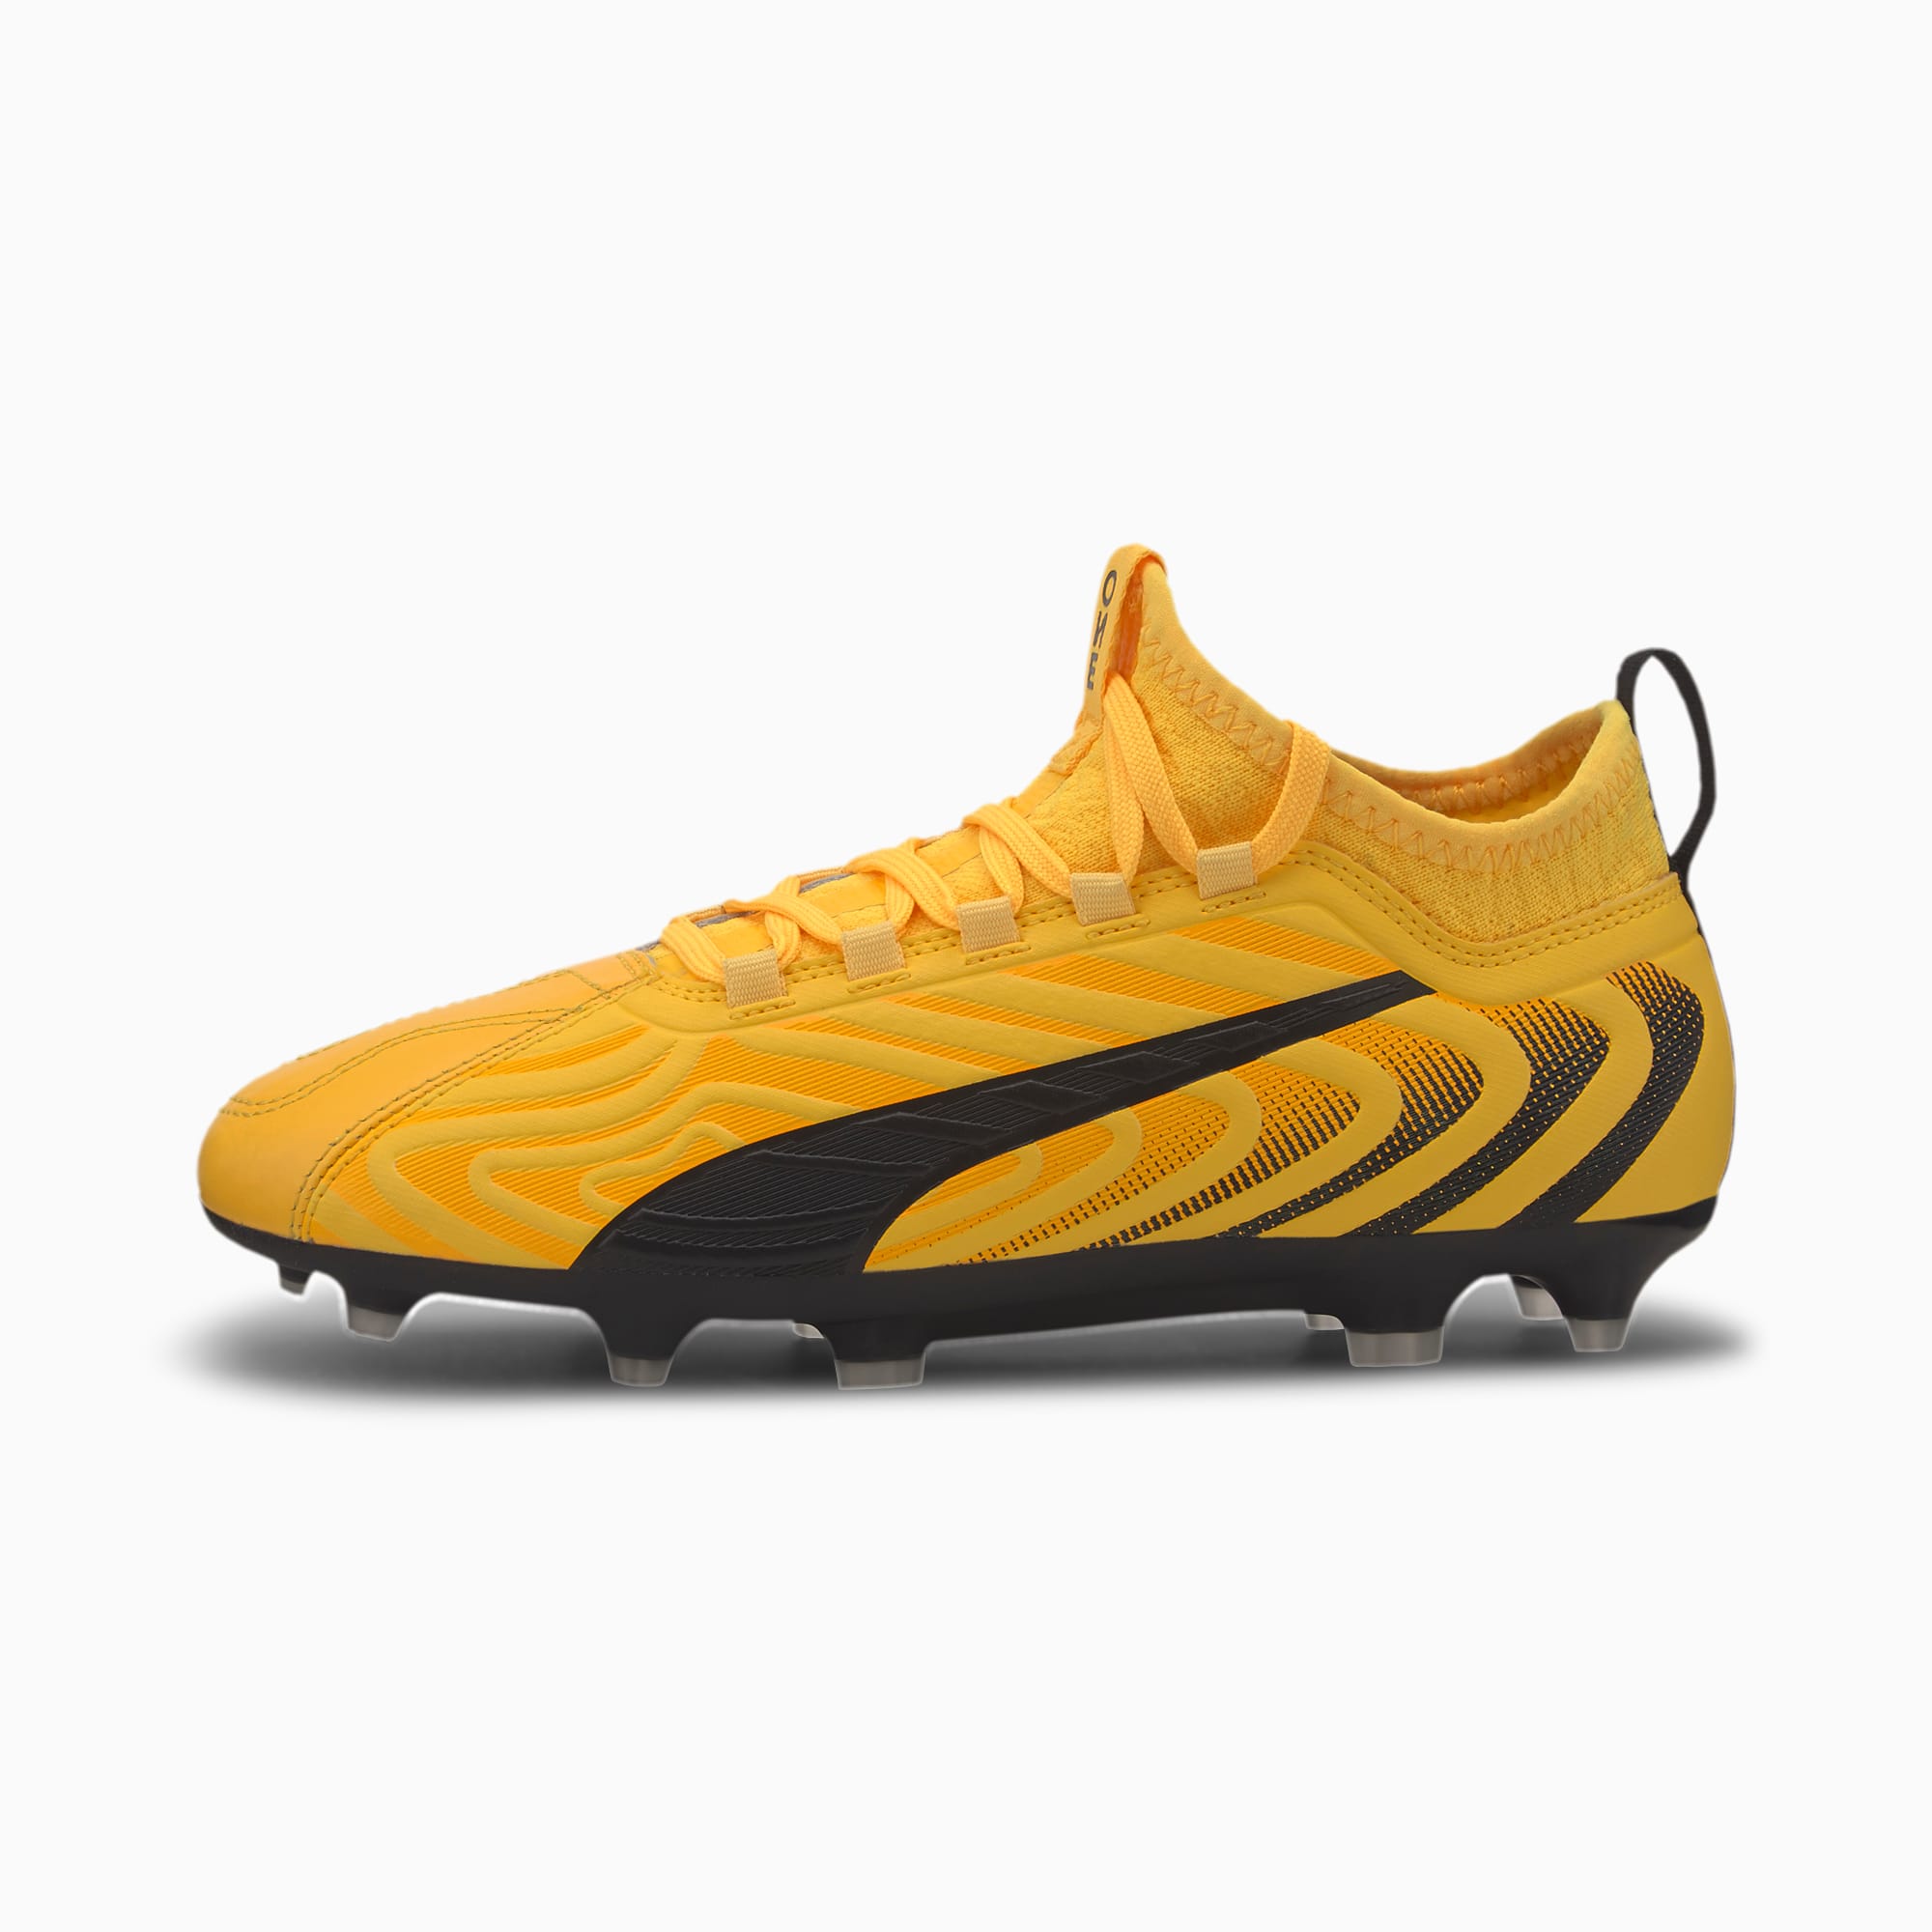 puma one soccer shoes